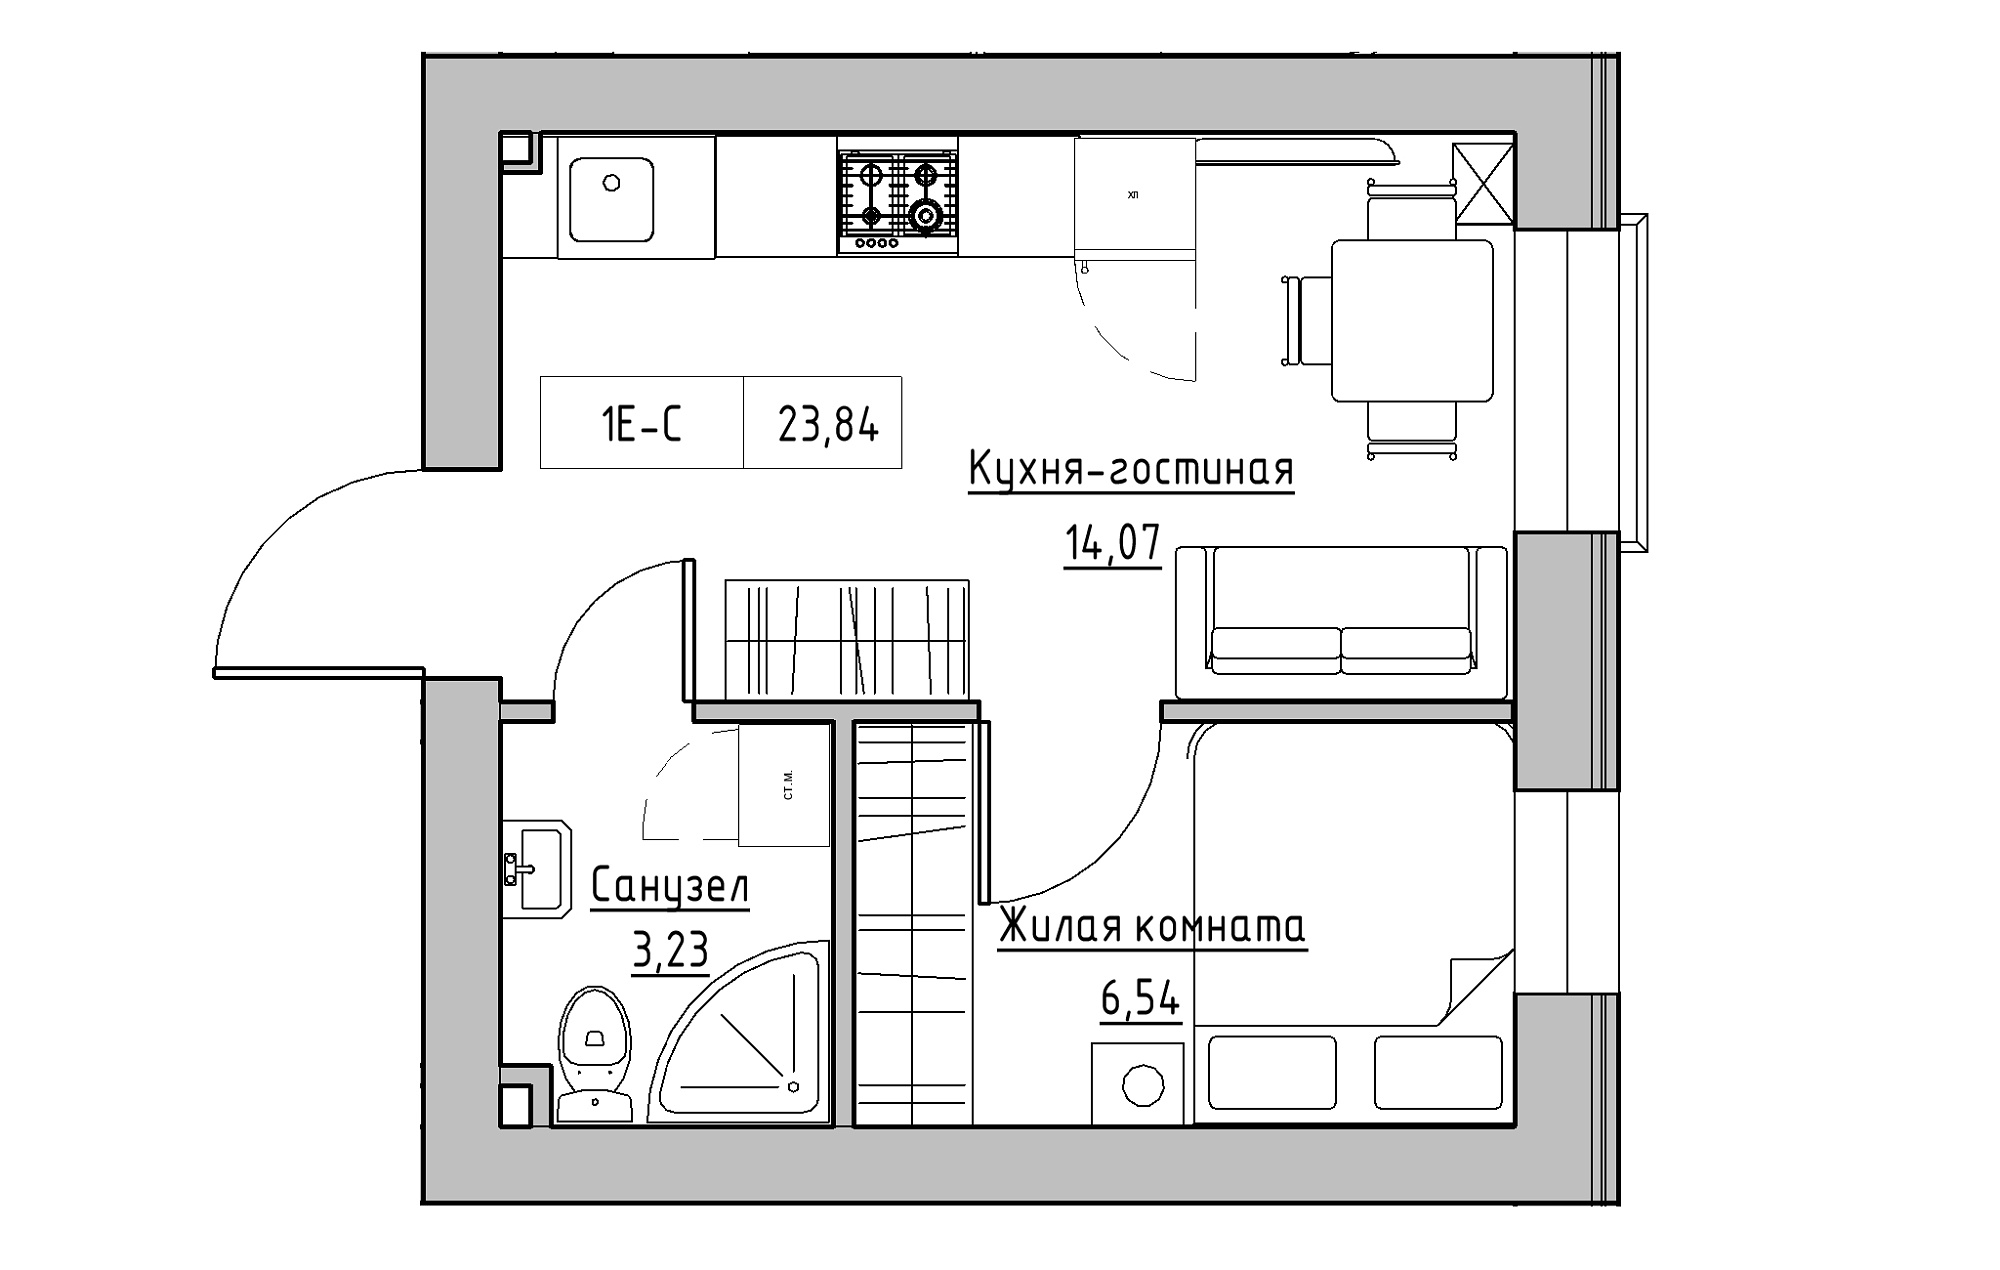 Planning 1-rm flats area 23.84m2, KS-018-03/0011.